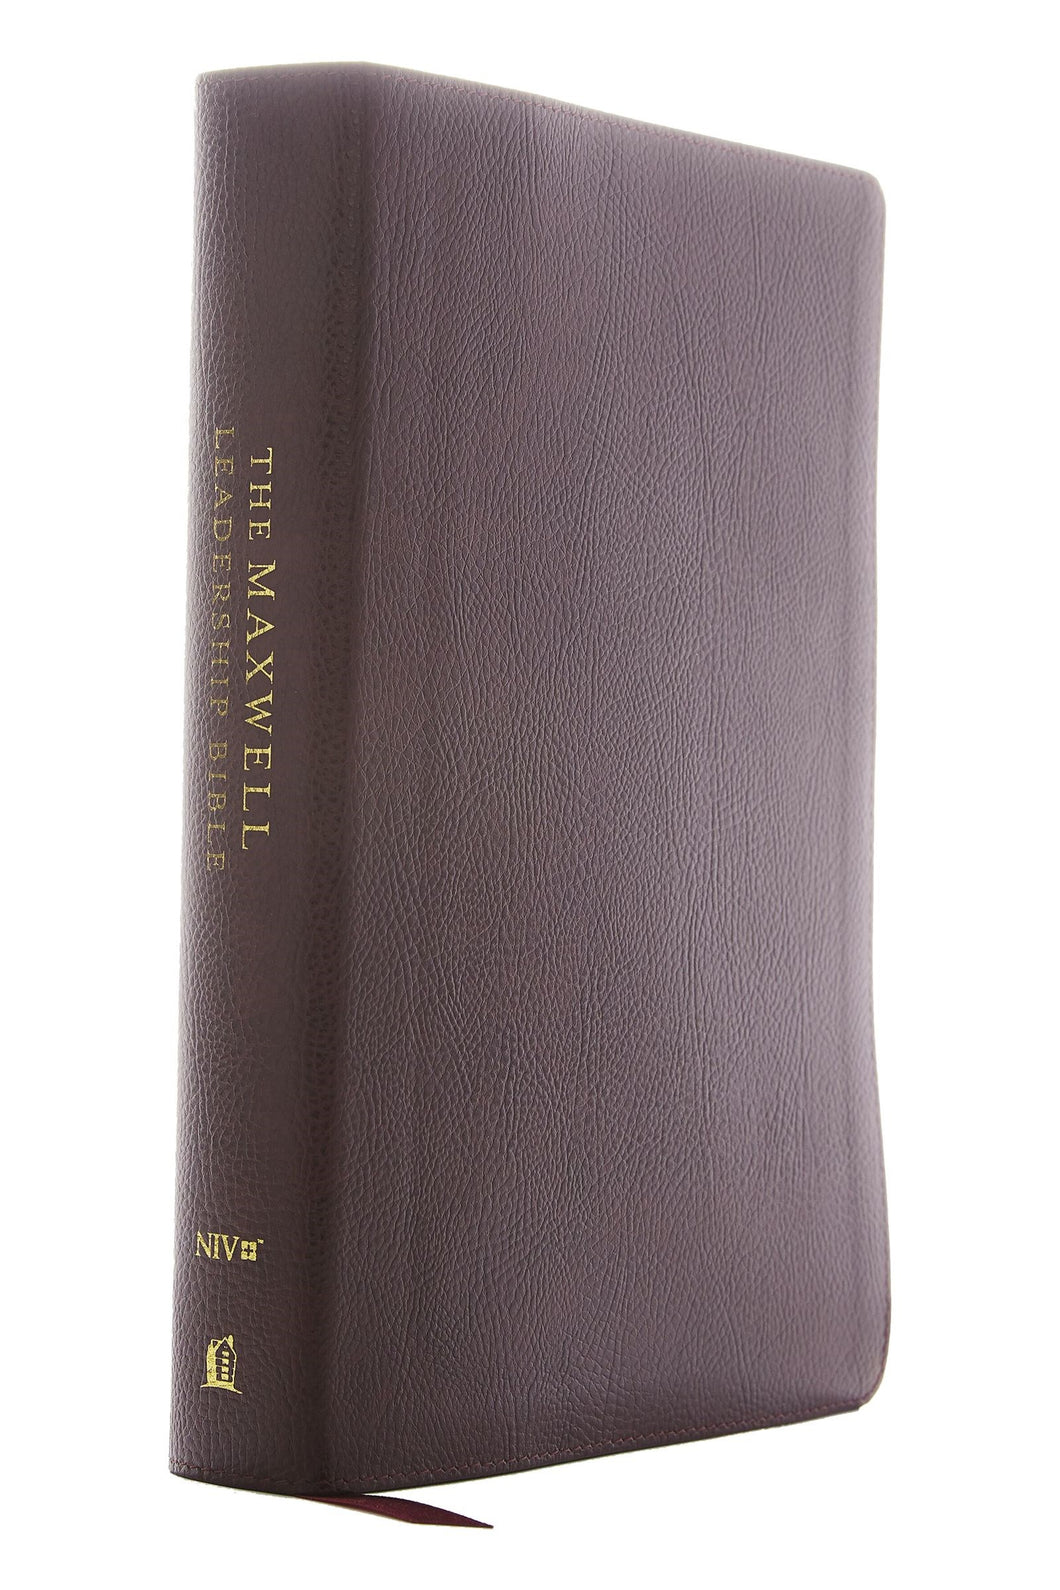 NIV Maxwell Leadership Bible (Third Edition) (Comfort Print)-Black Leathersoft